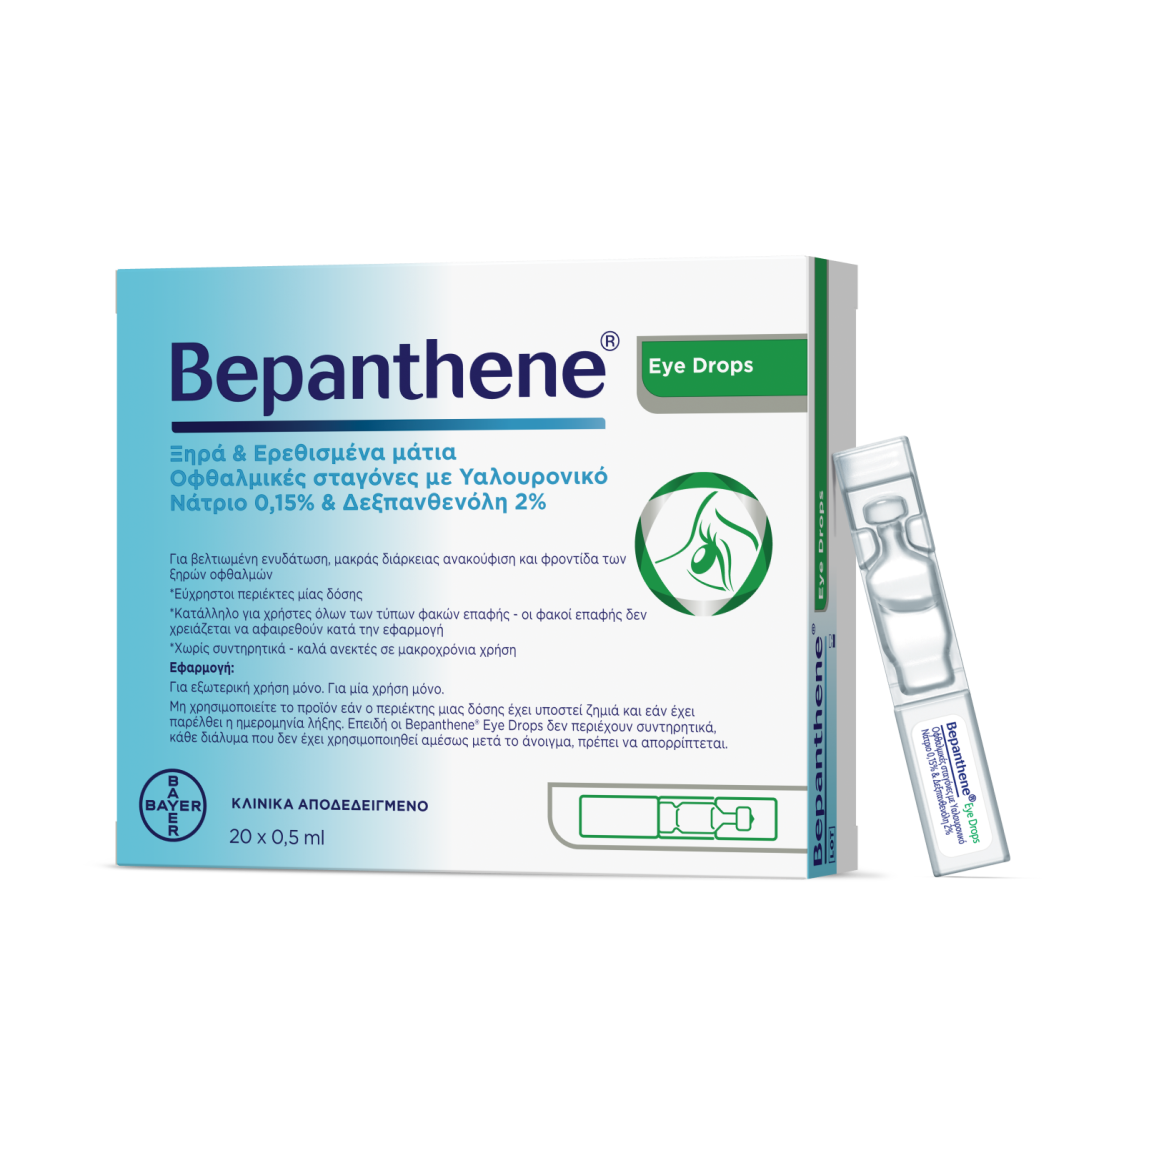 Bepanthene® Eye Drops